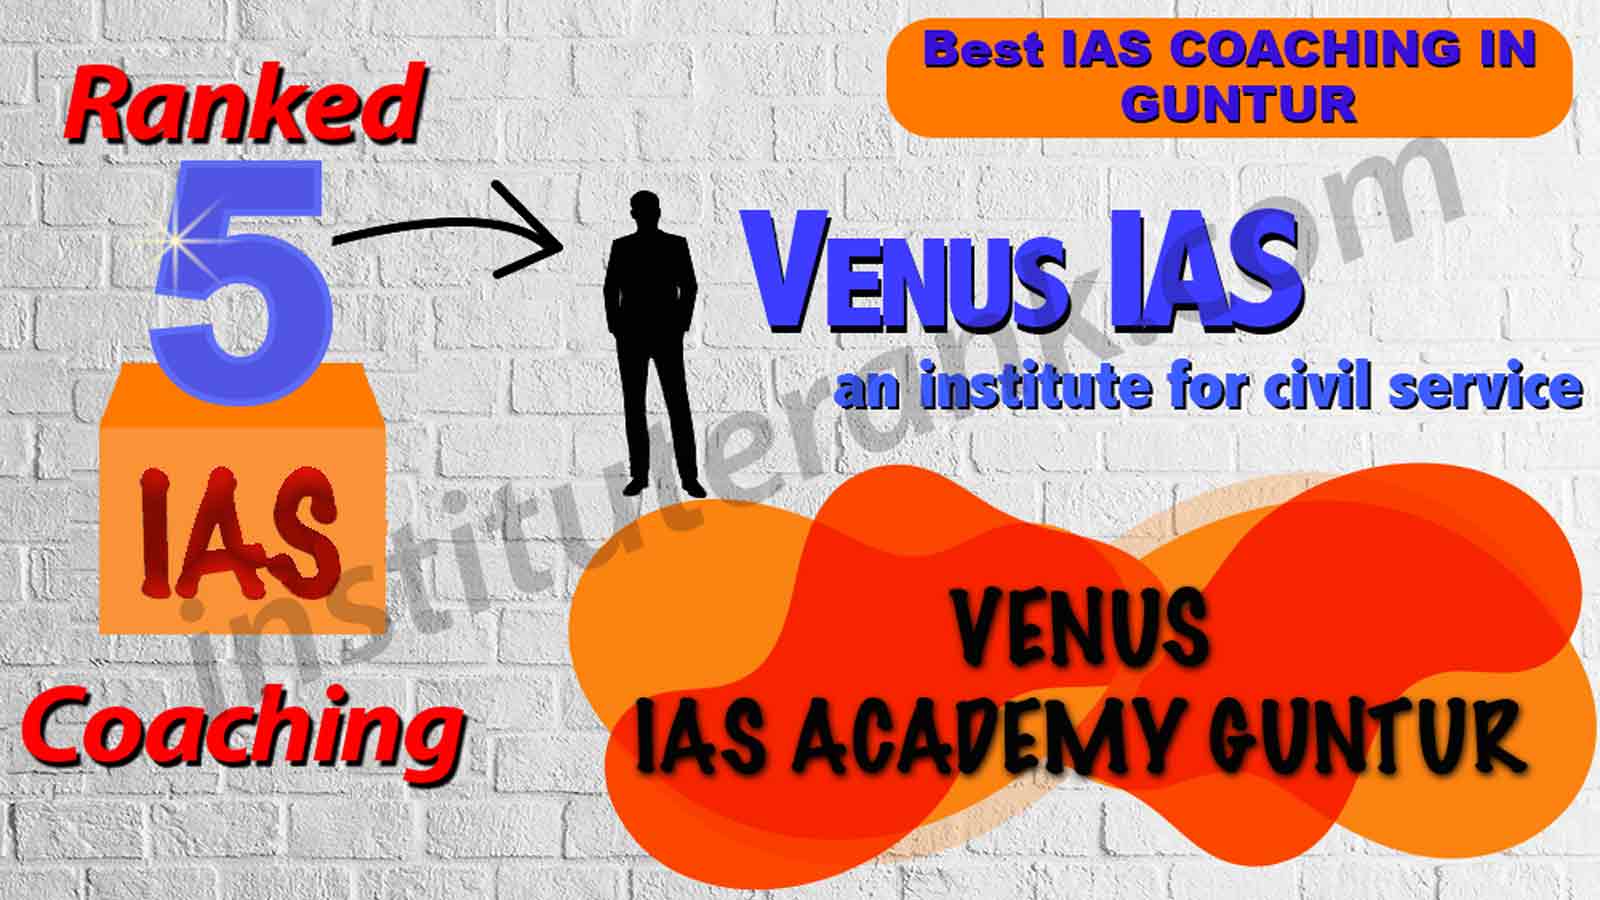 Best IAS Coaching in Guntur